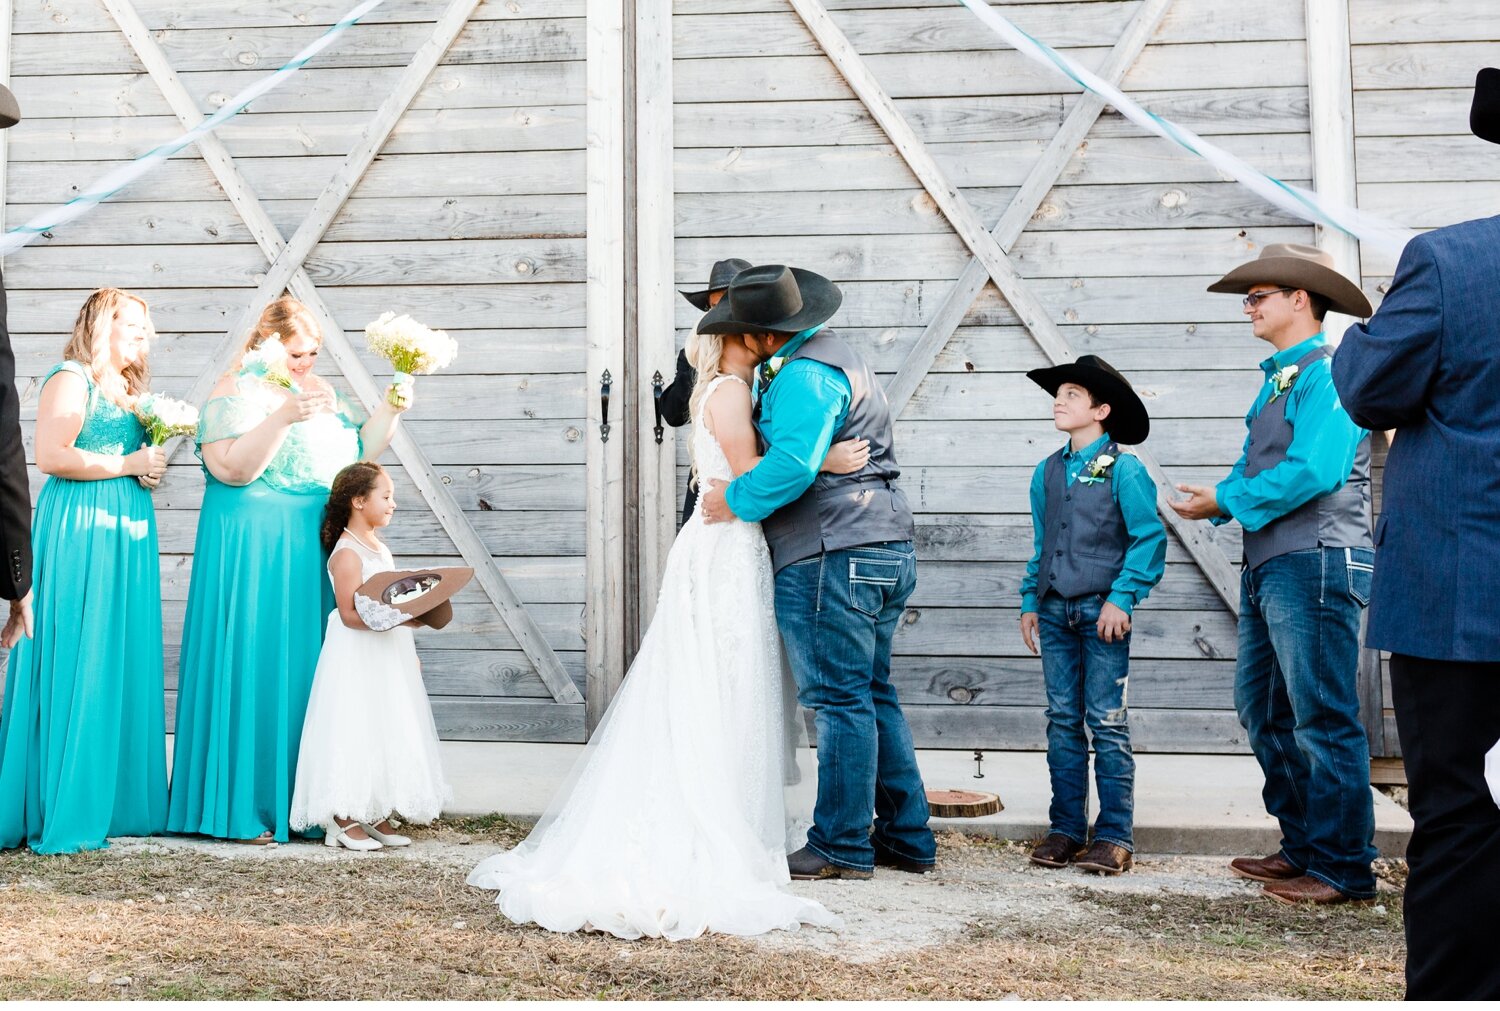 Destinnee + Chance Rustic Barn Wedding at Elm Creek Ranch_0052.jpg